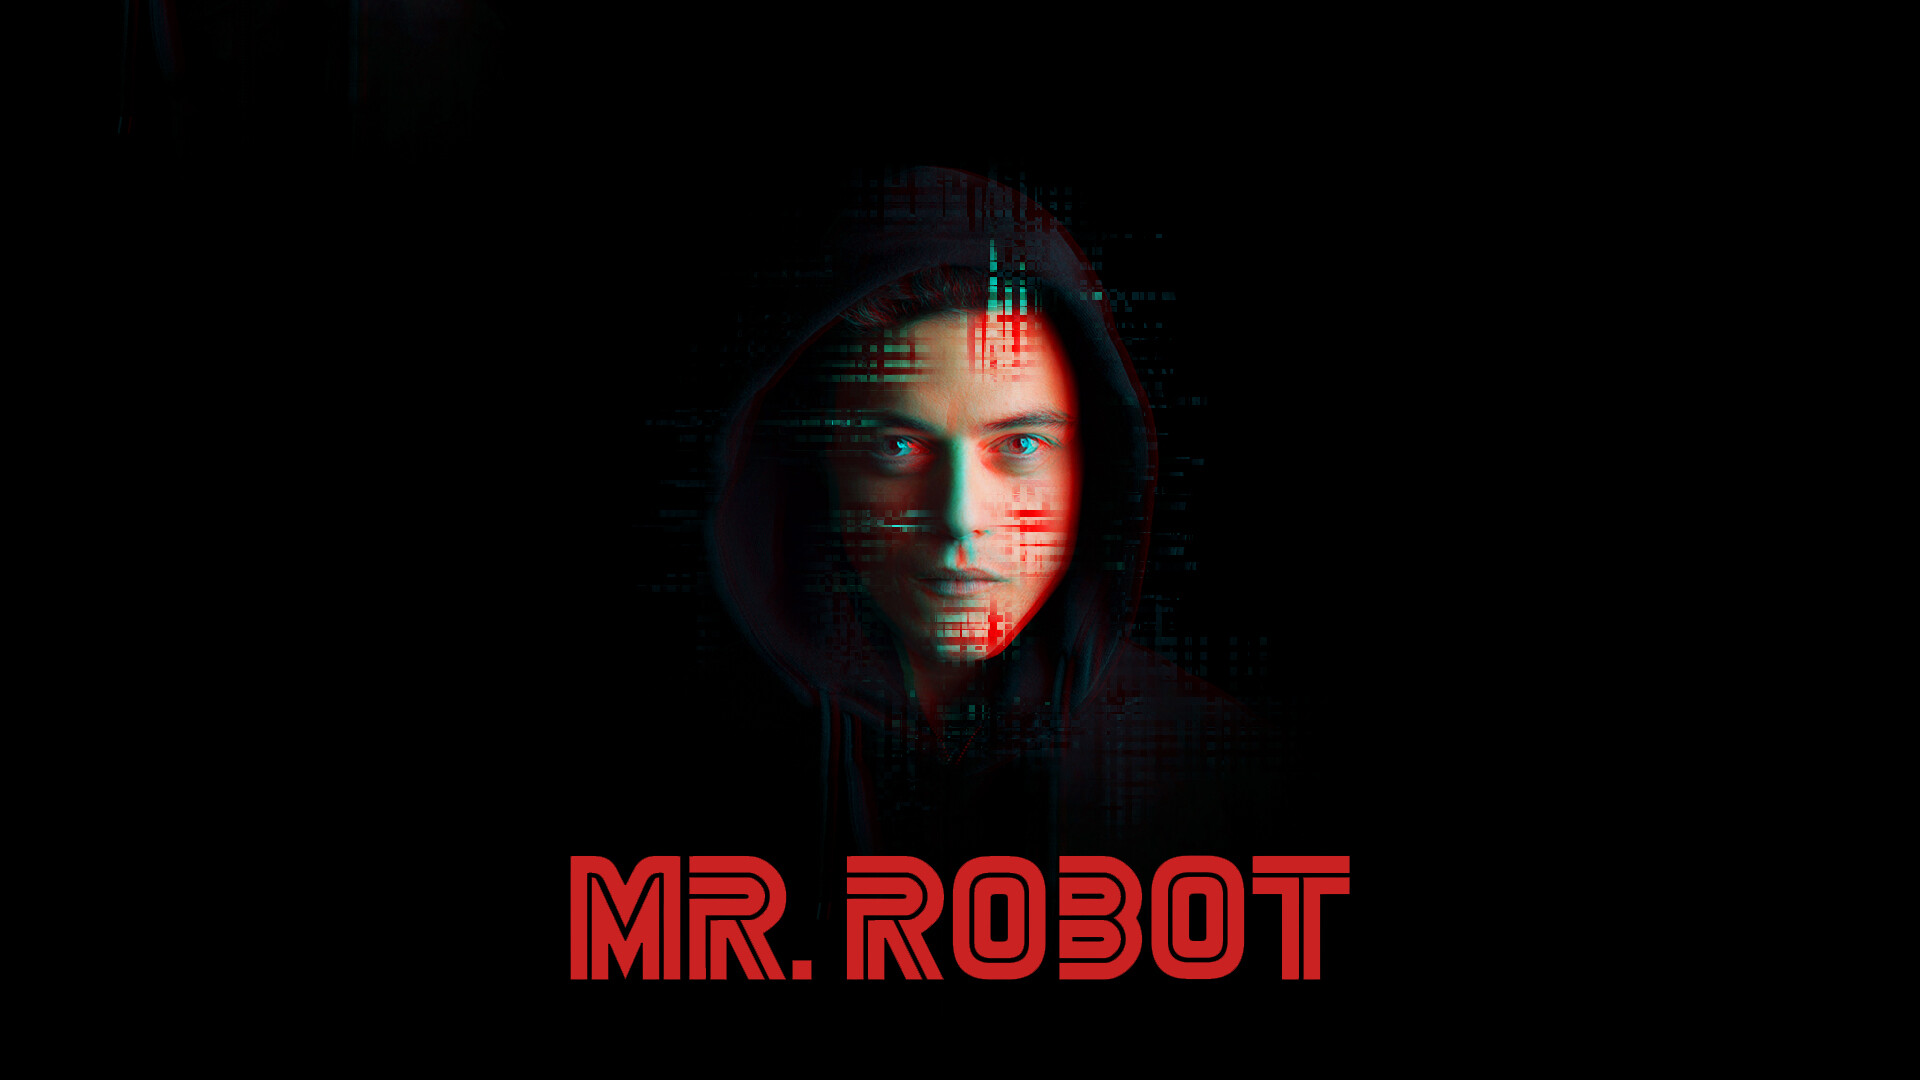 Mr. Robot: A USA Network original drama-thriller series created by Sam Esmail. 1920x1080 Full HD Background.